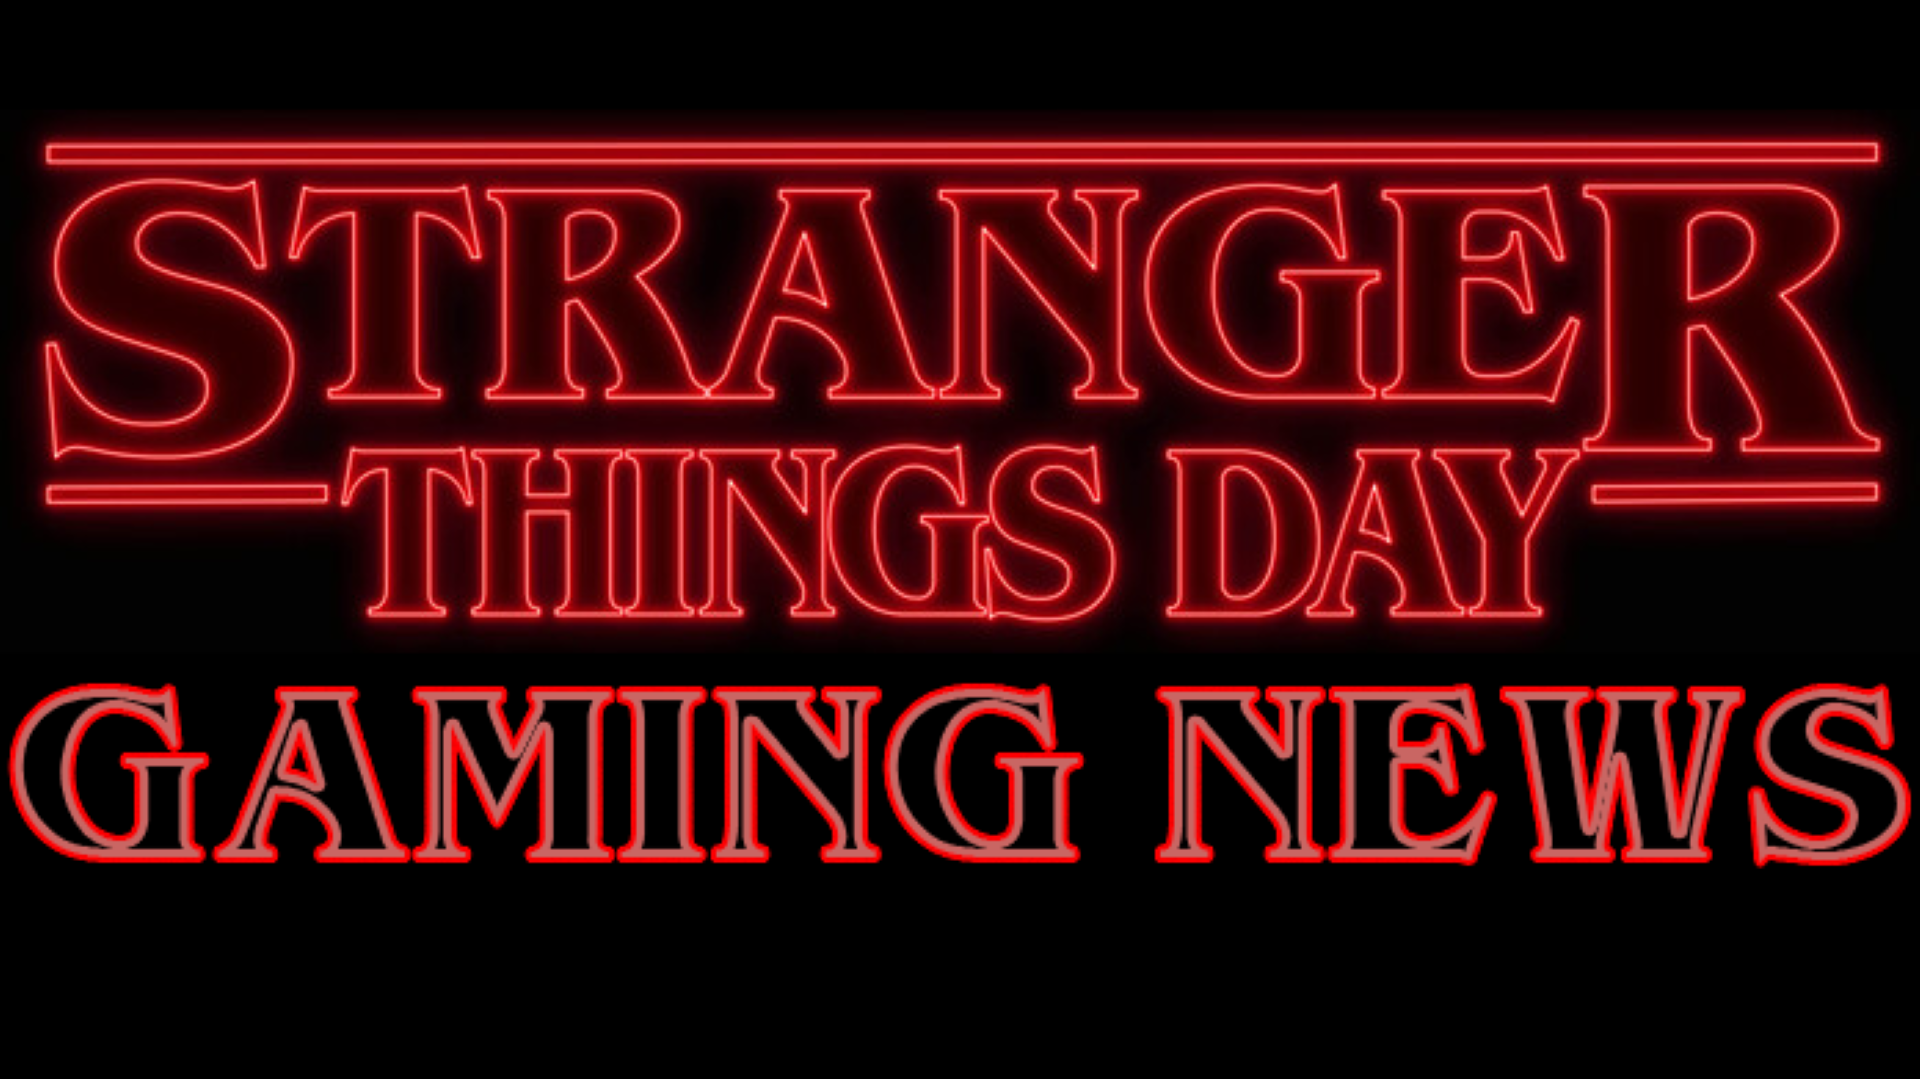 Stranger Things Day